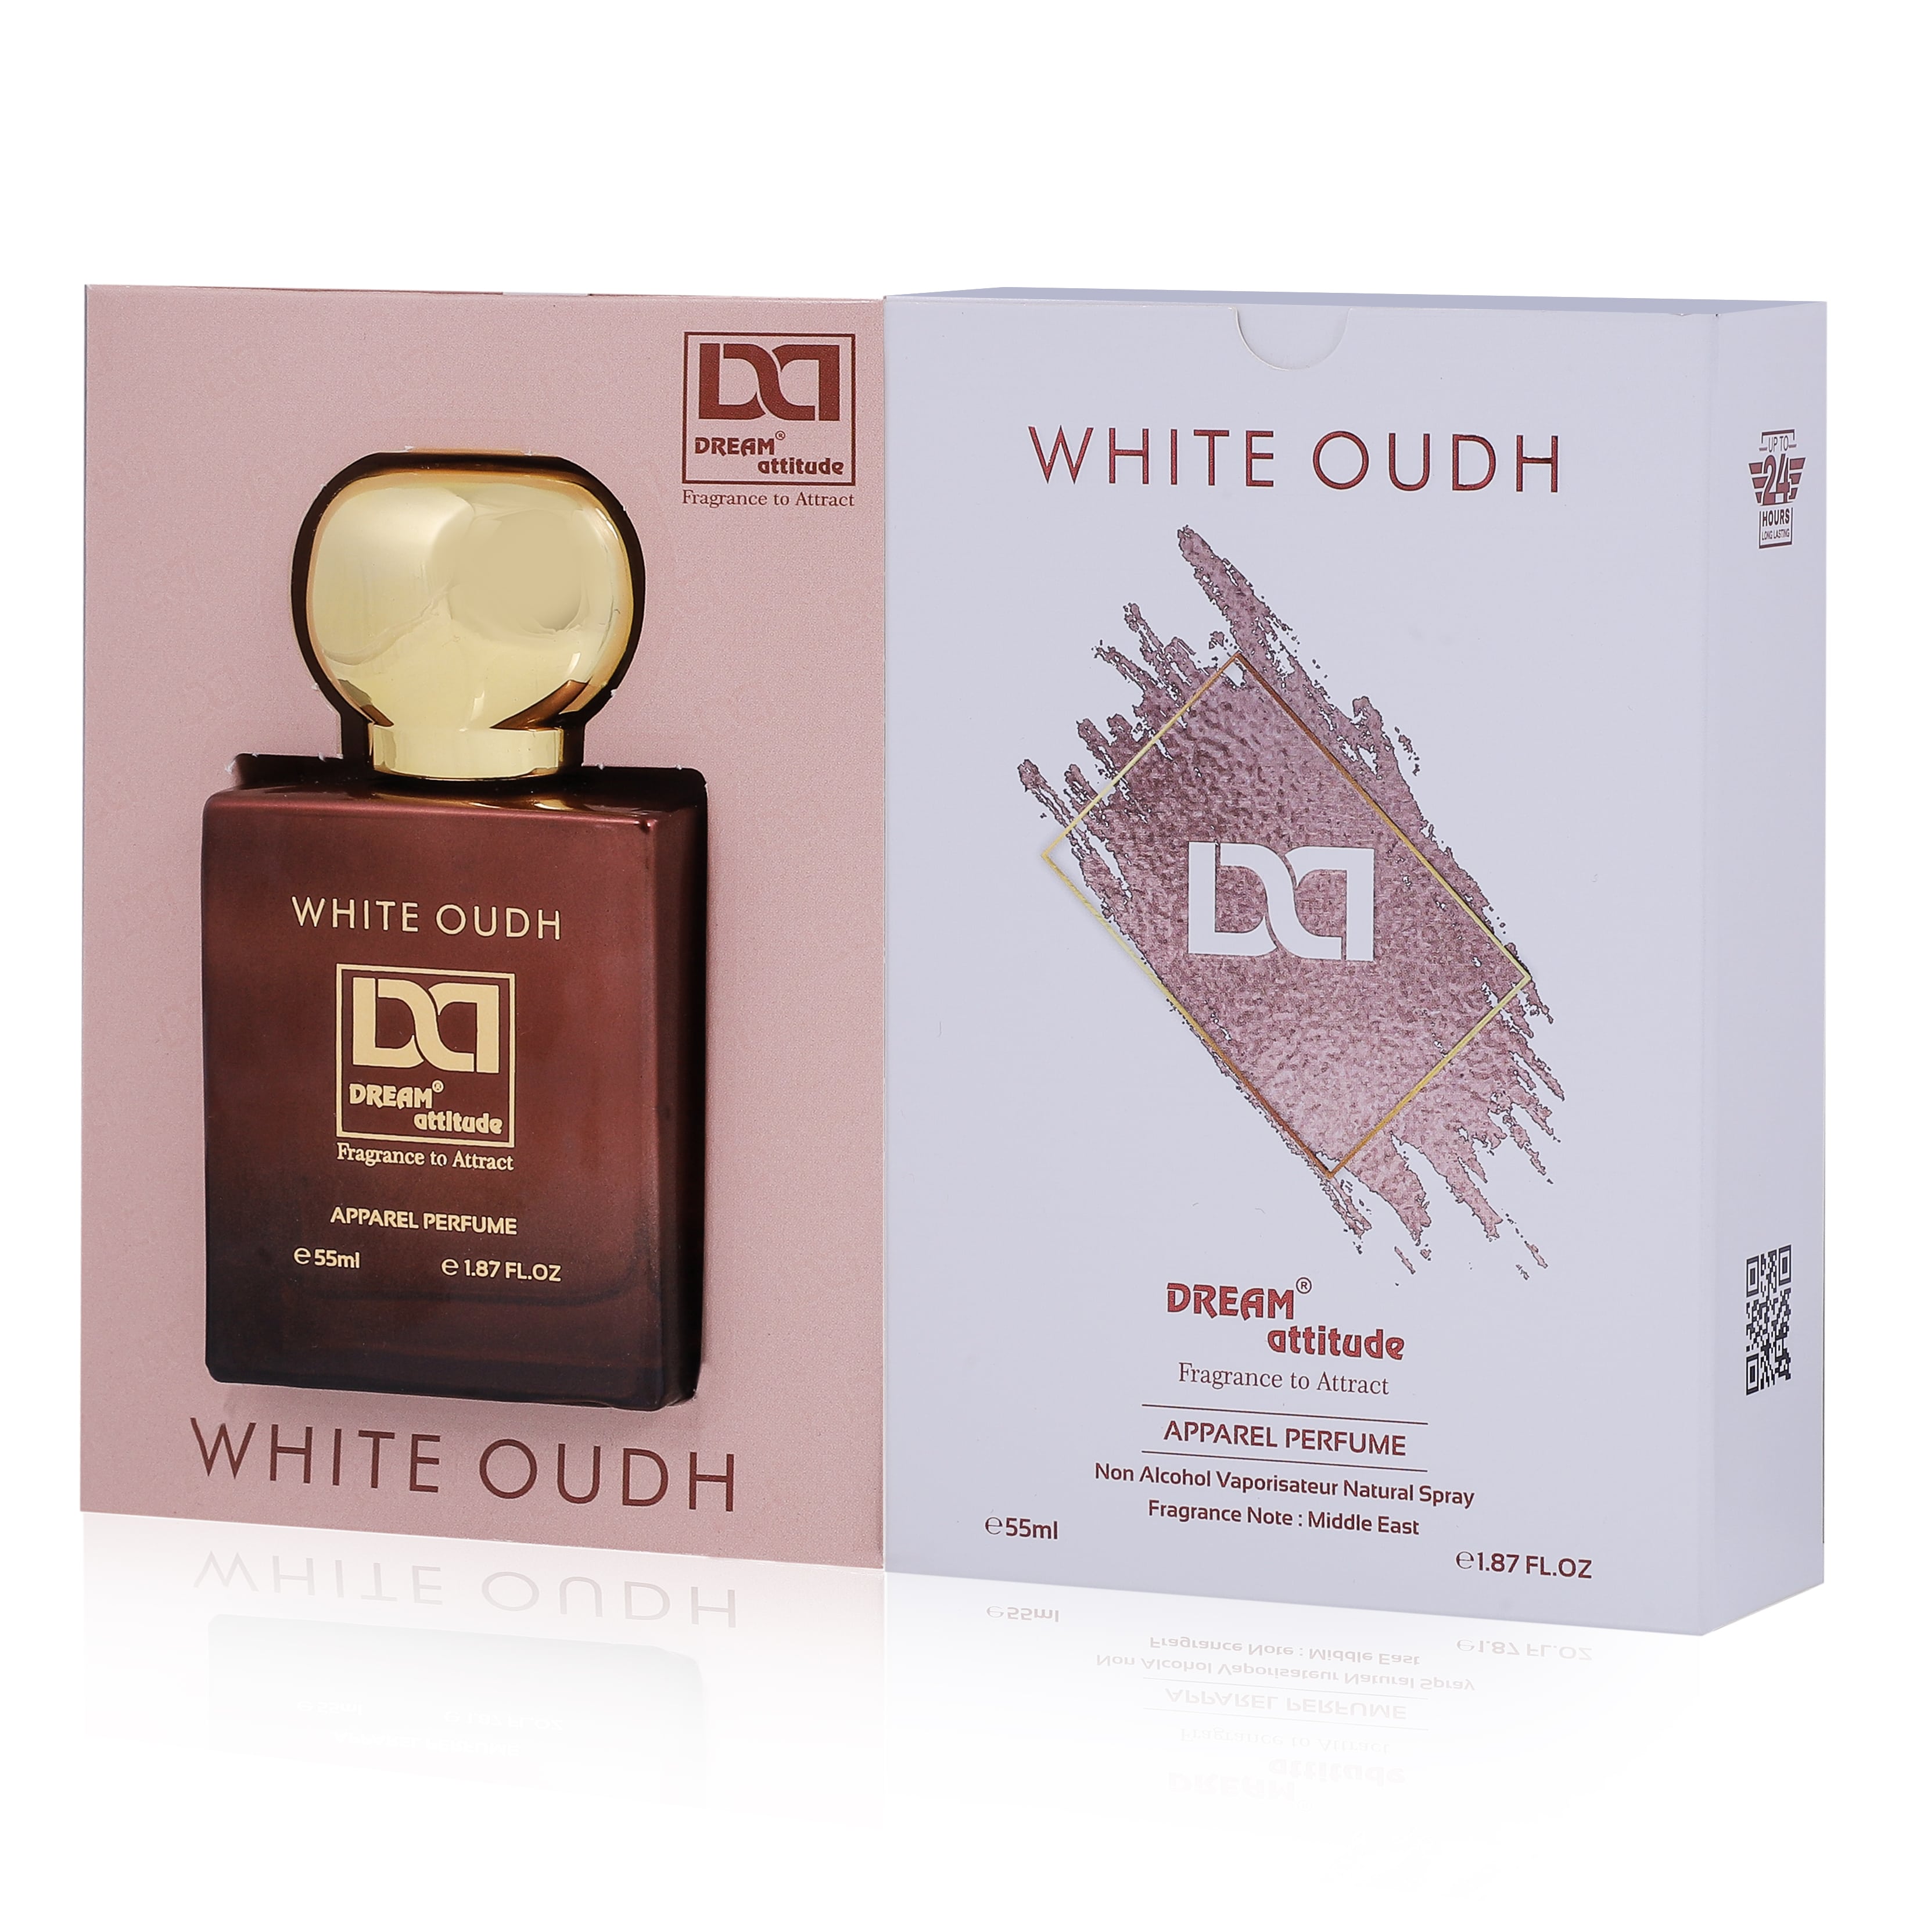 DREAM attitude White Oud Perfume: Opulent Essence and Refined Elegance